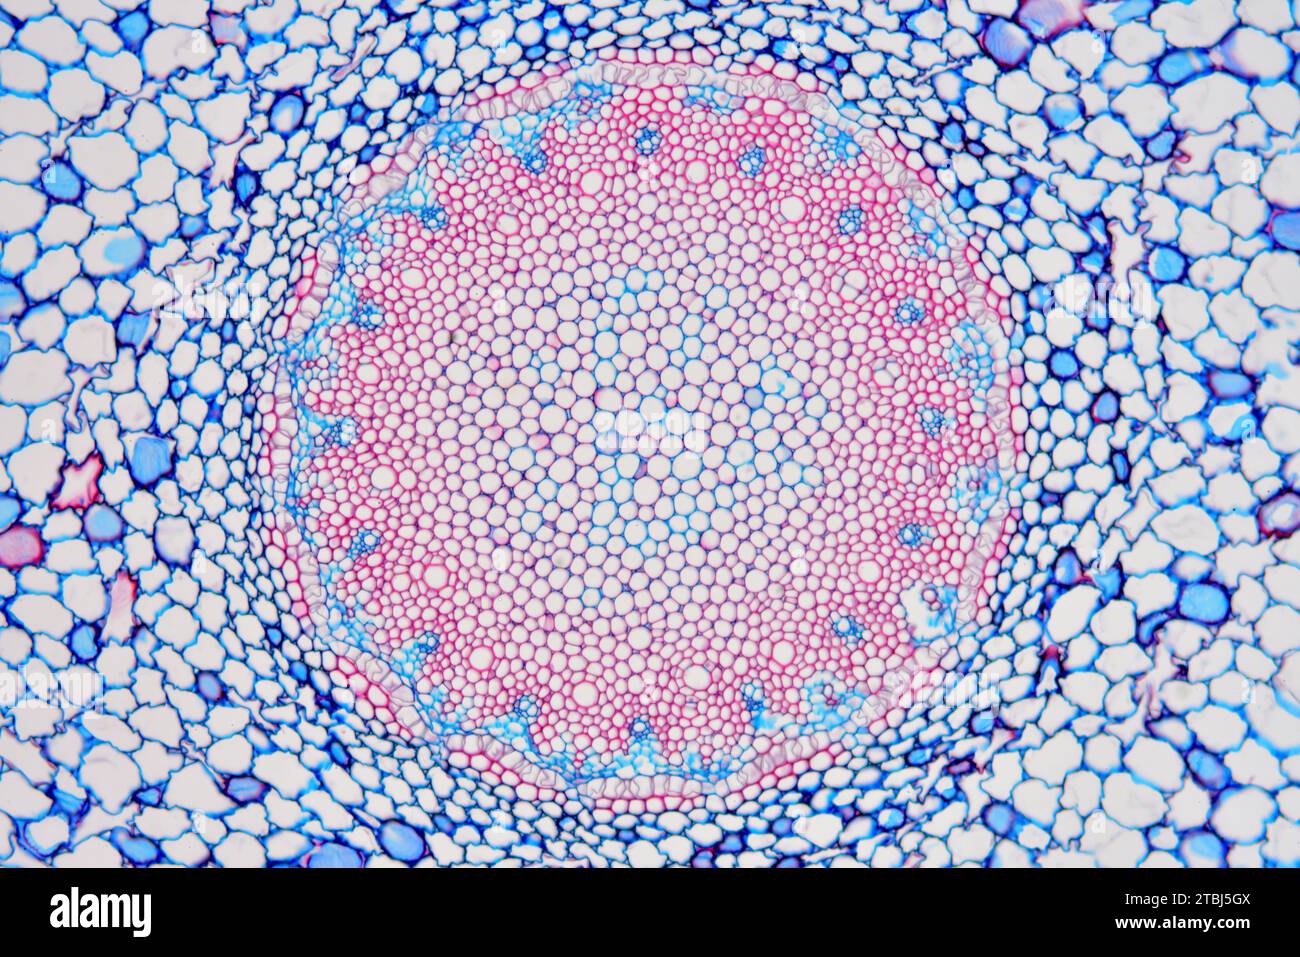 Radice aerea Dendrobium. Microscopio ottico X100. Foto Stock